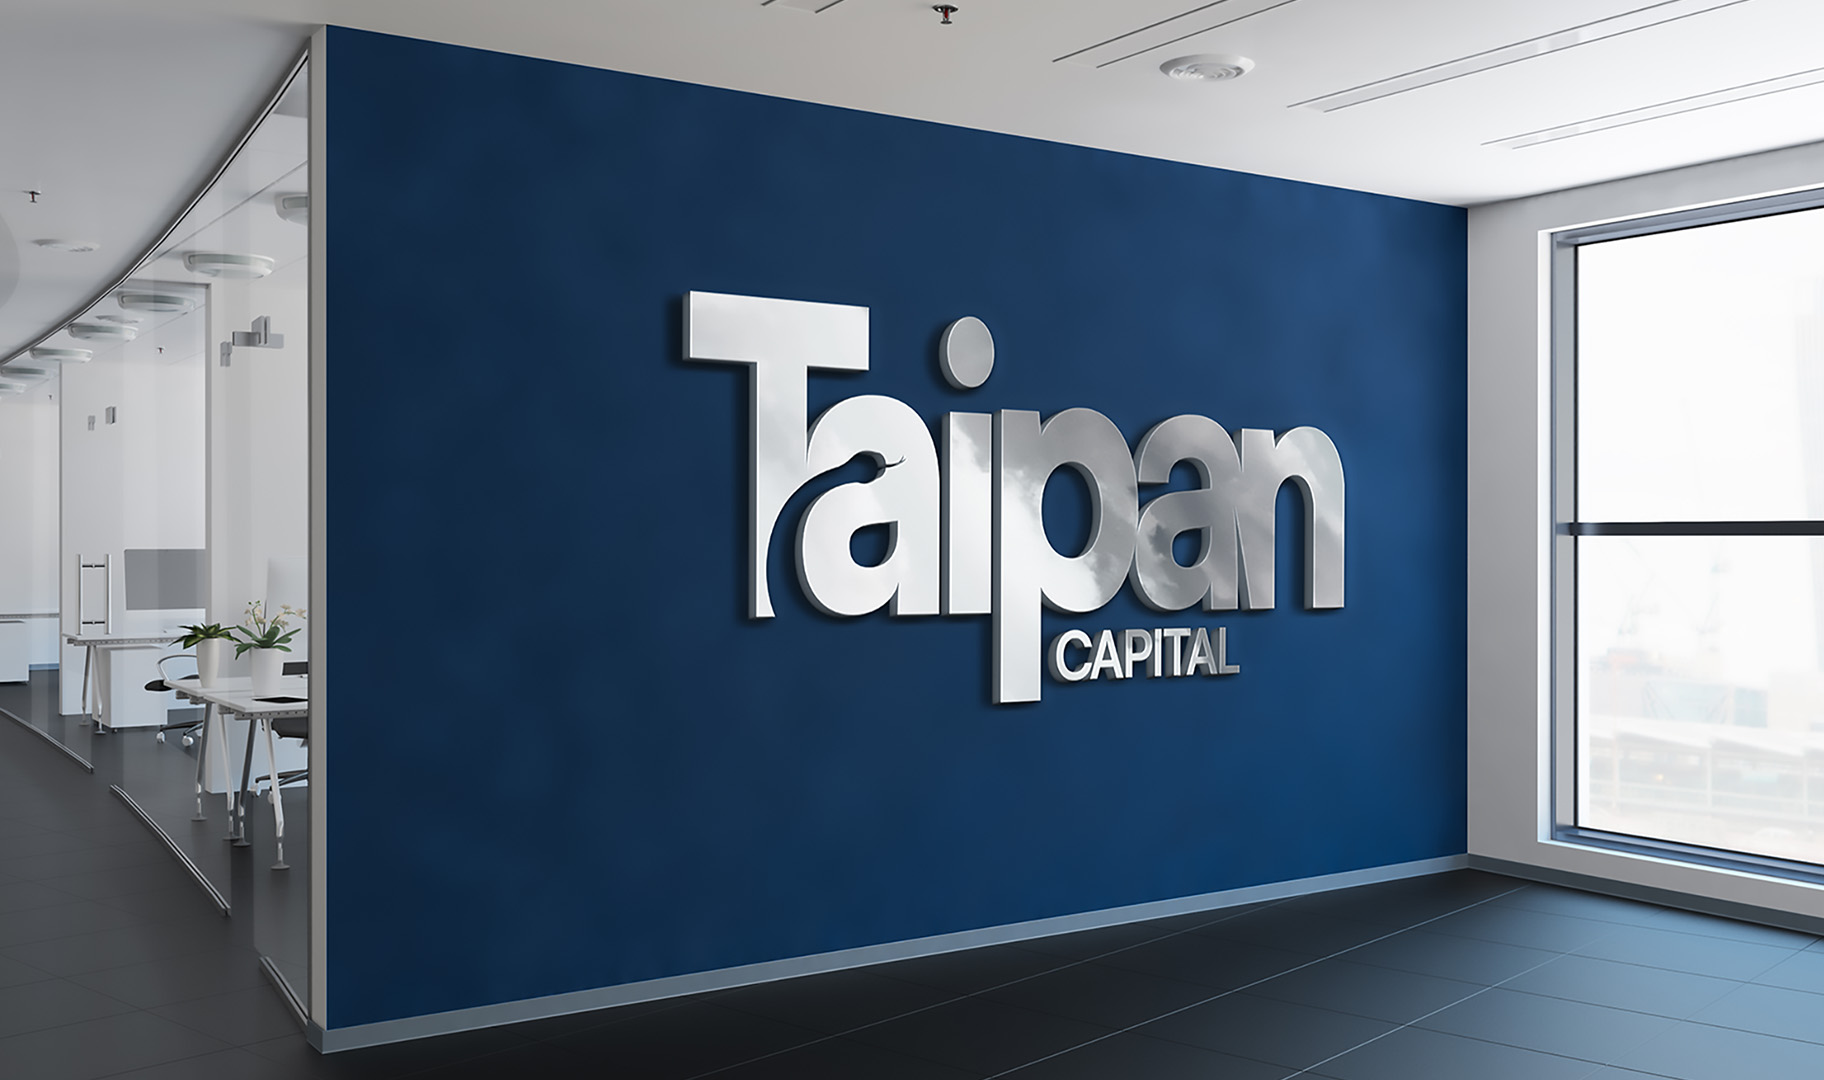 Taipan Capital